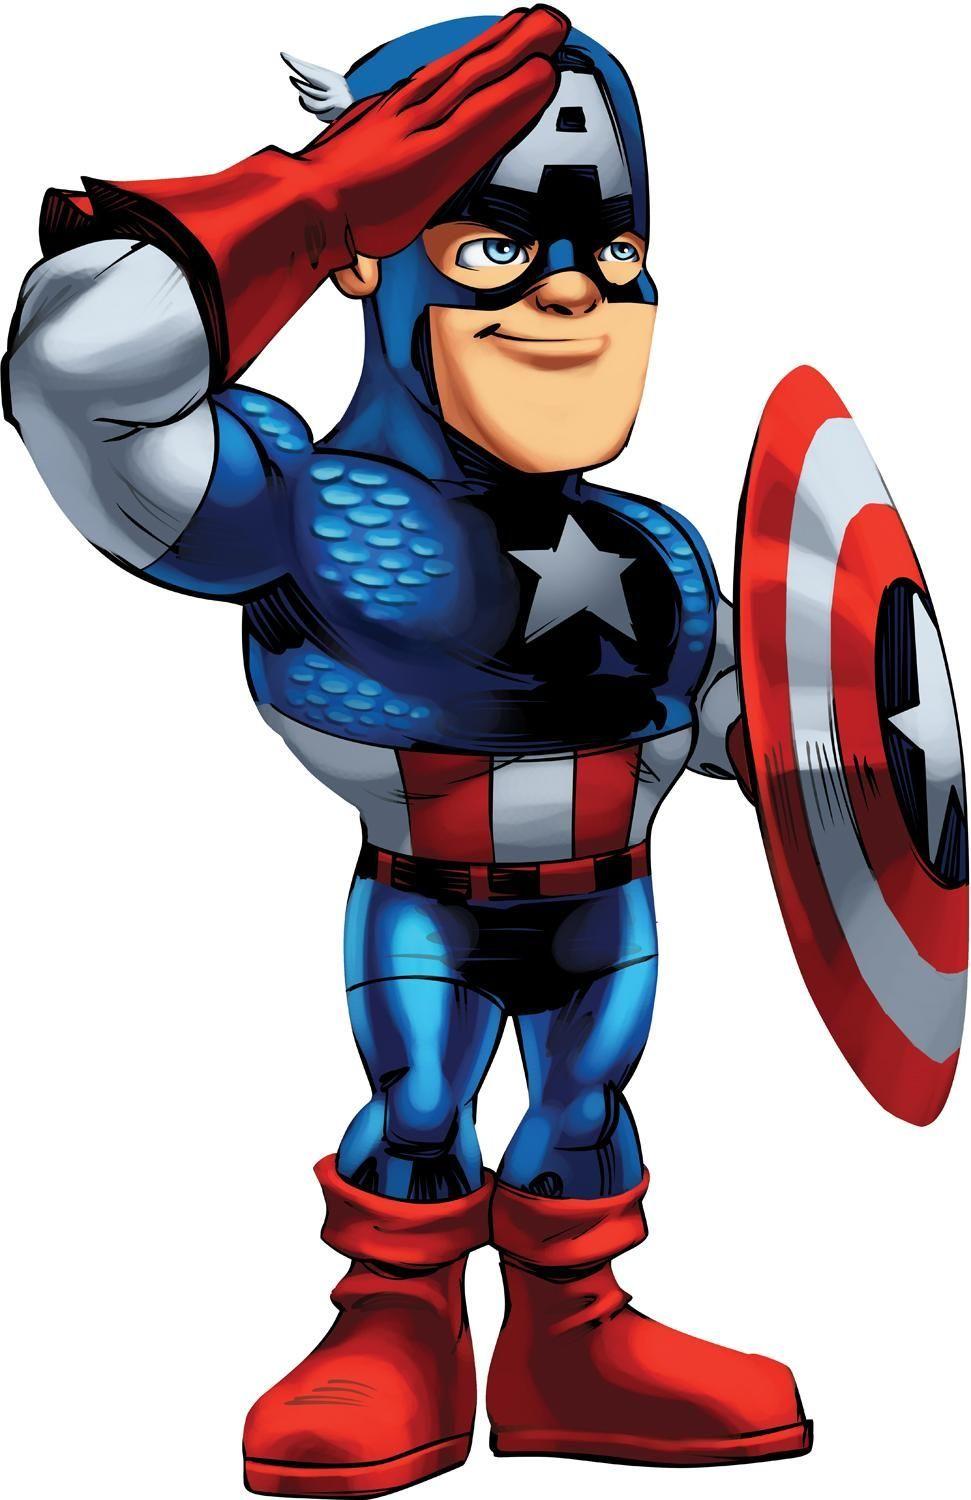 captain america cartoon Large Image. Guy stuff